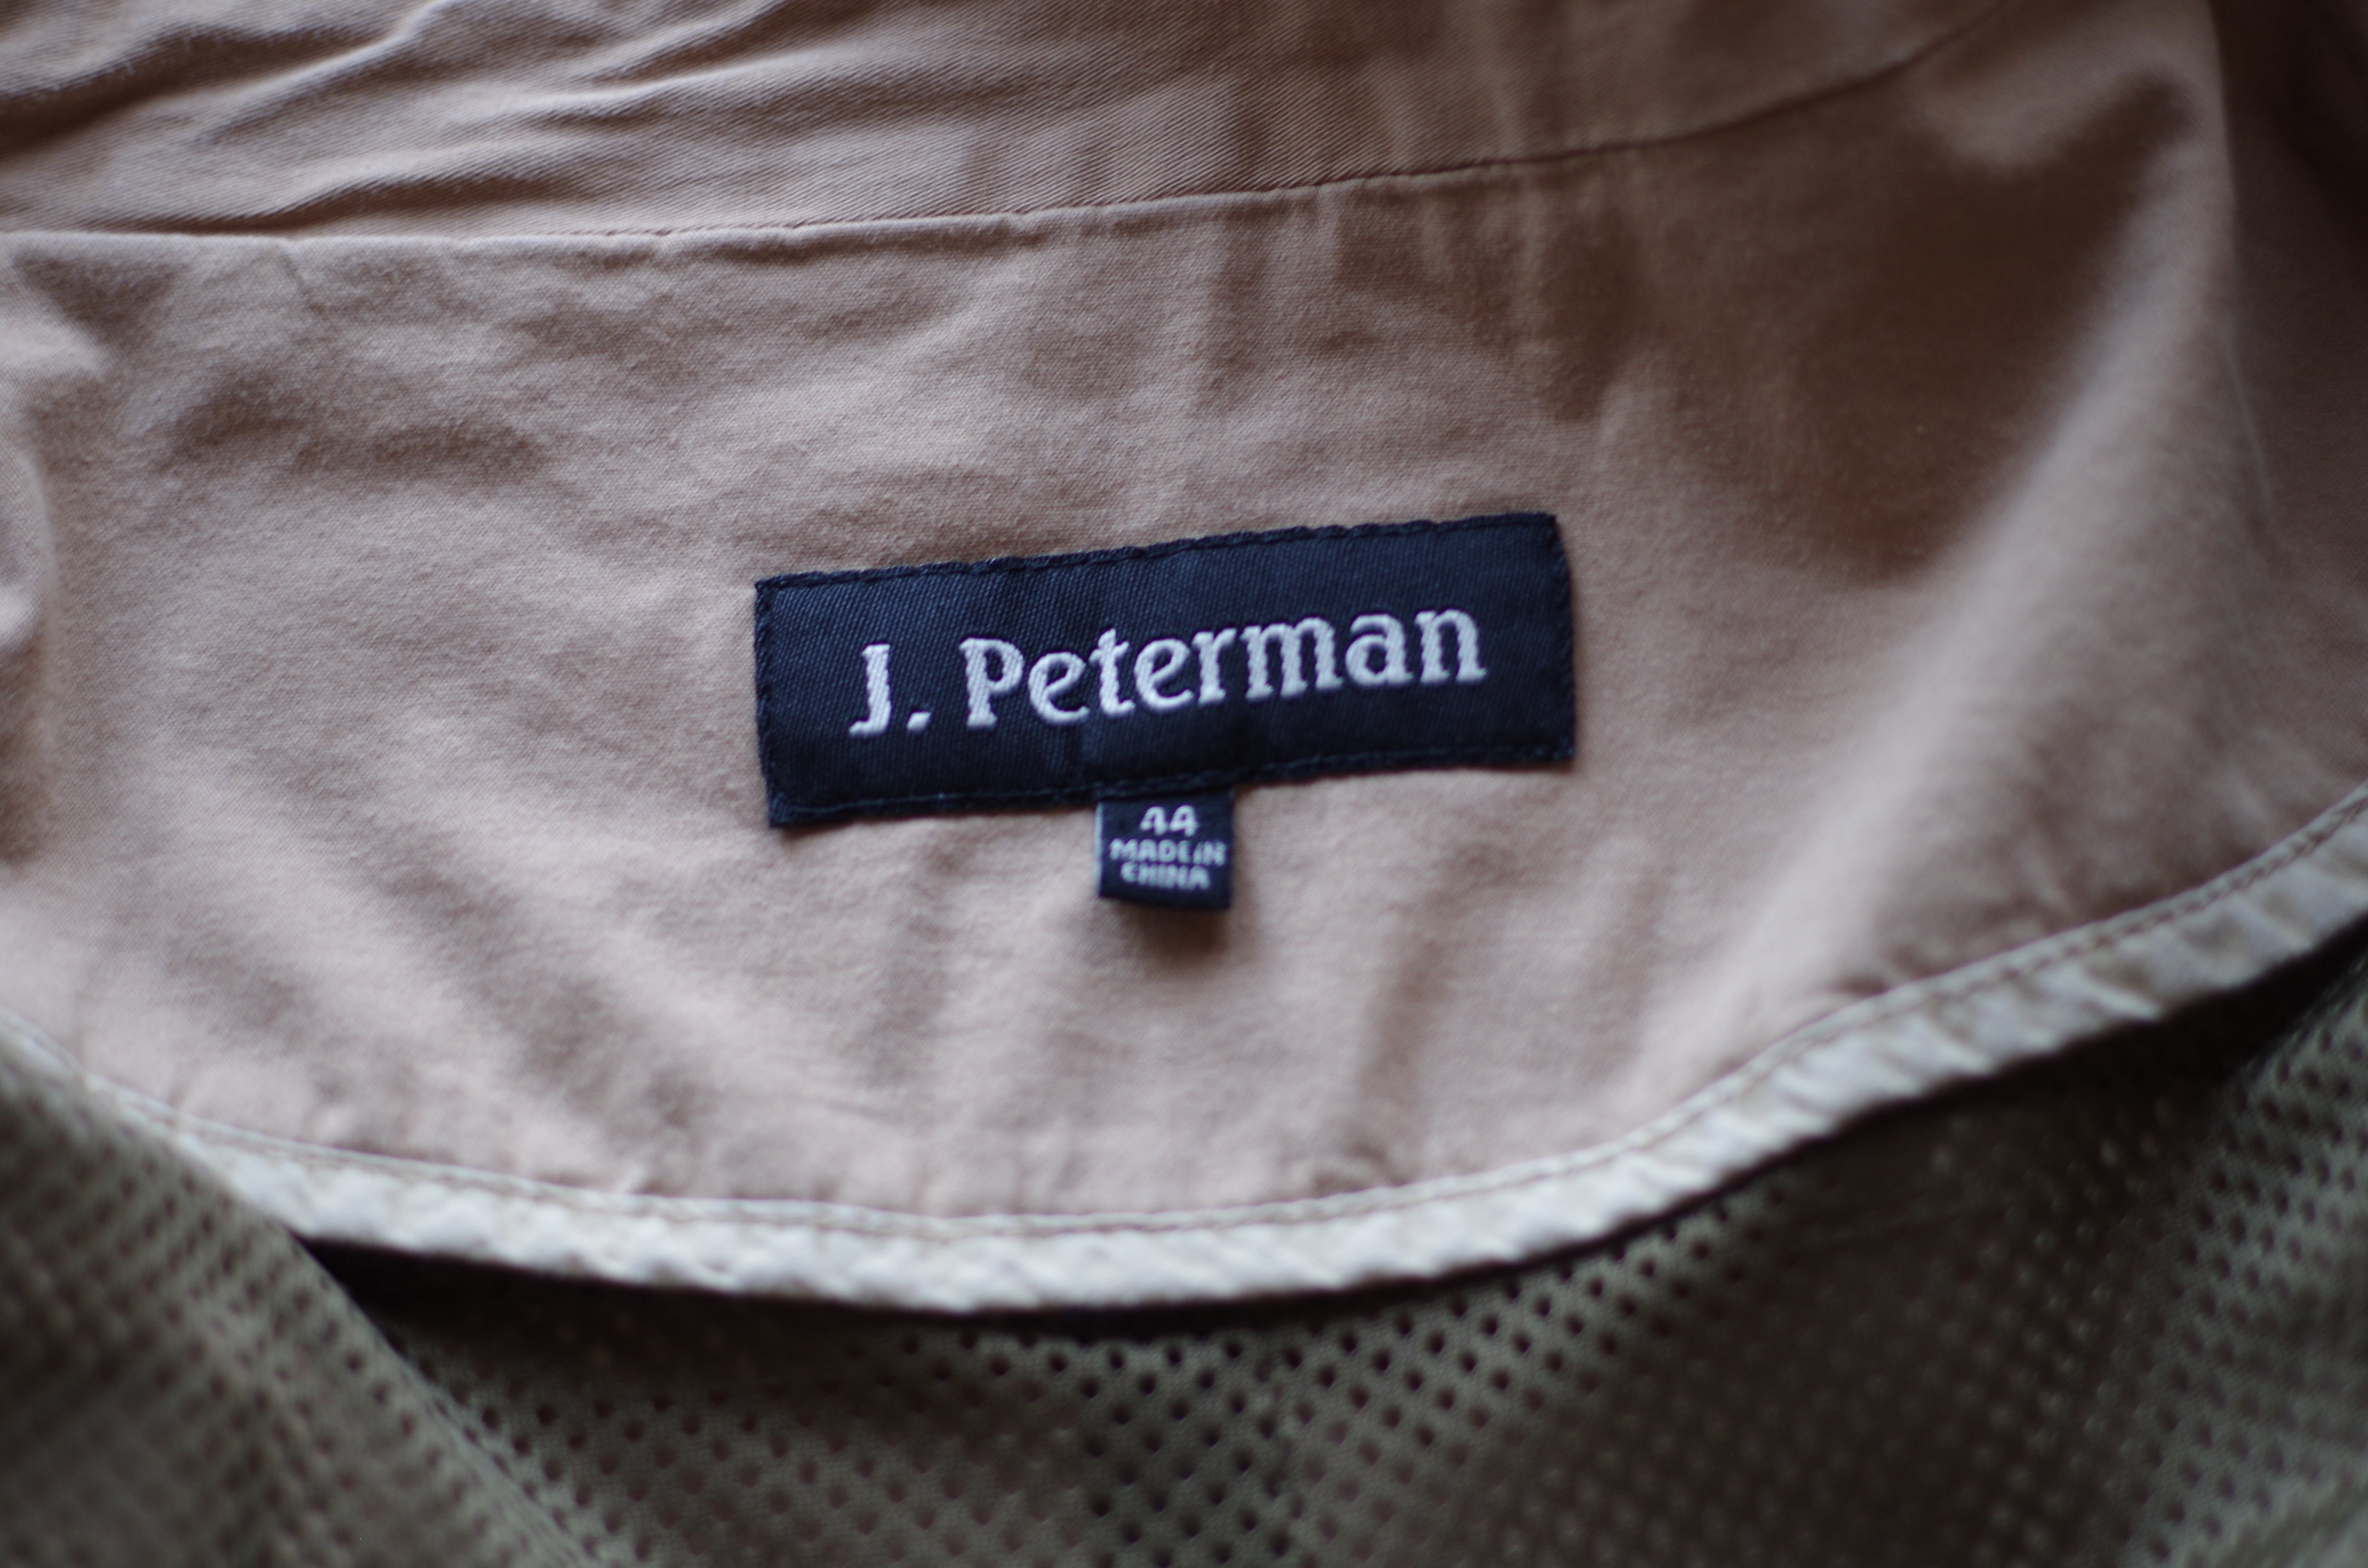 J. Peterman Cotton Safari Jacket - 44